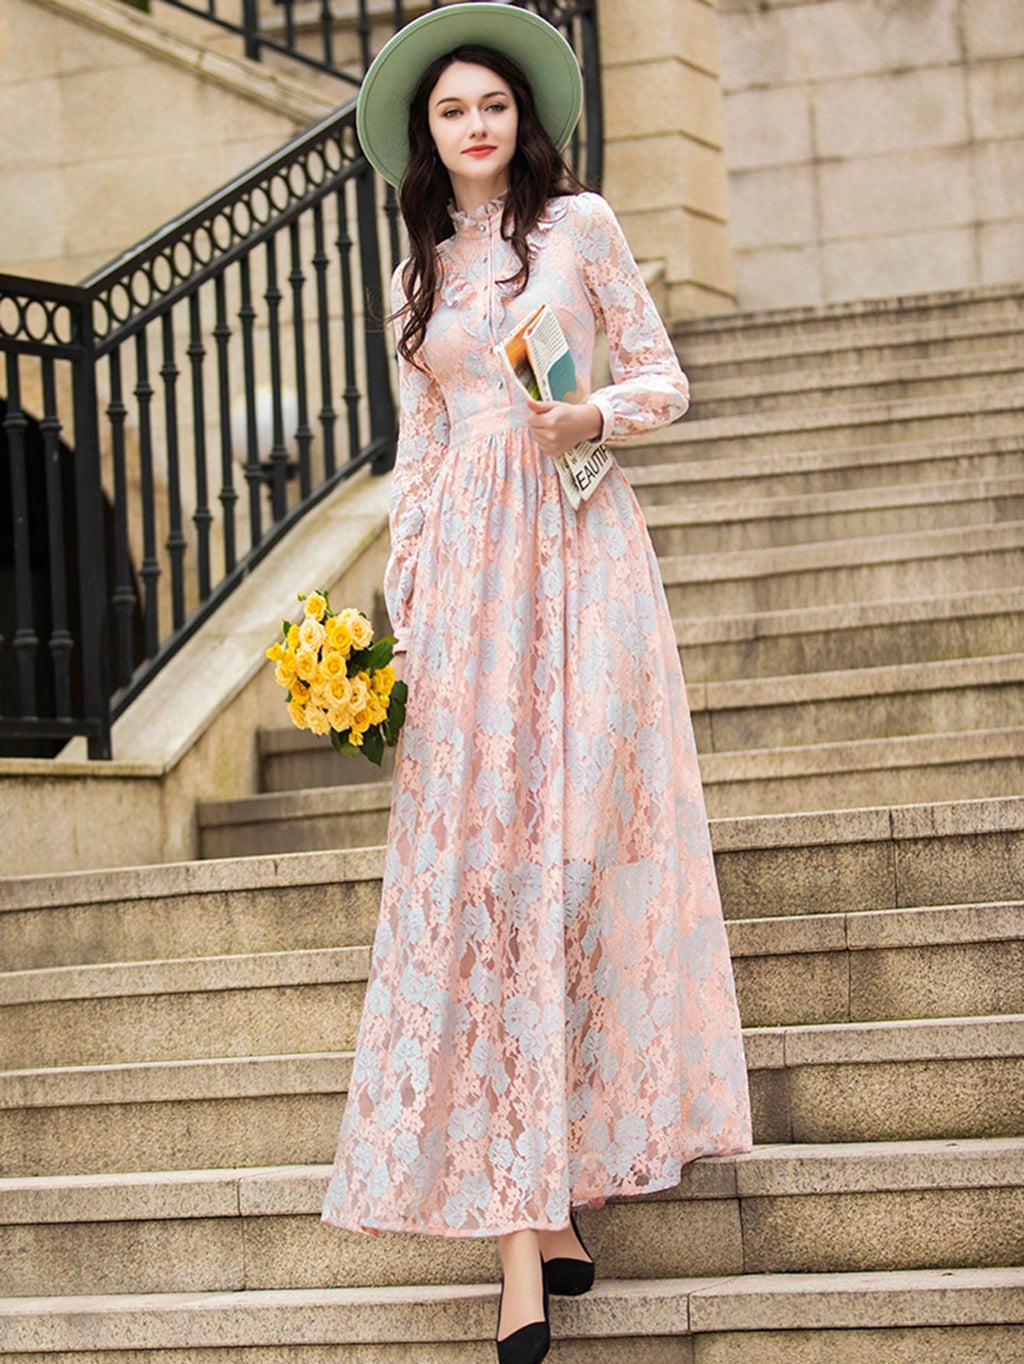 Elegant Ladies' Lace Long Sleeve Cocktail Dress